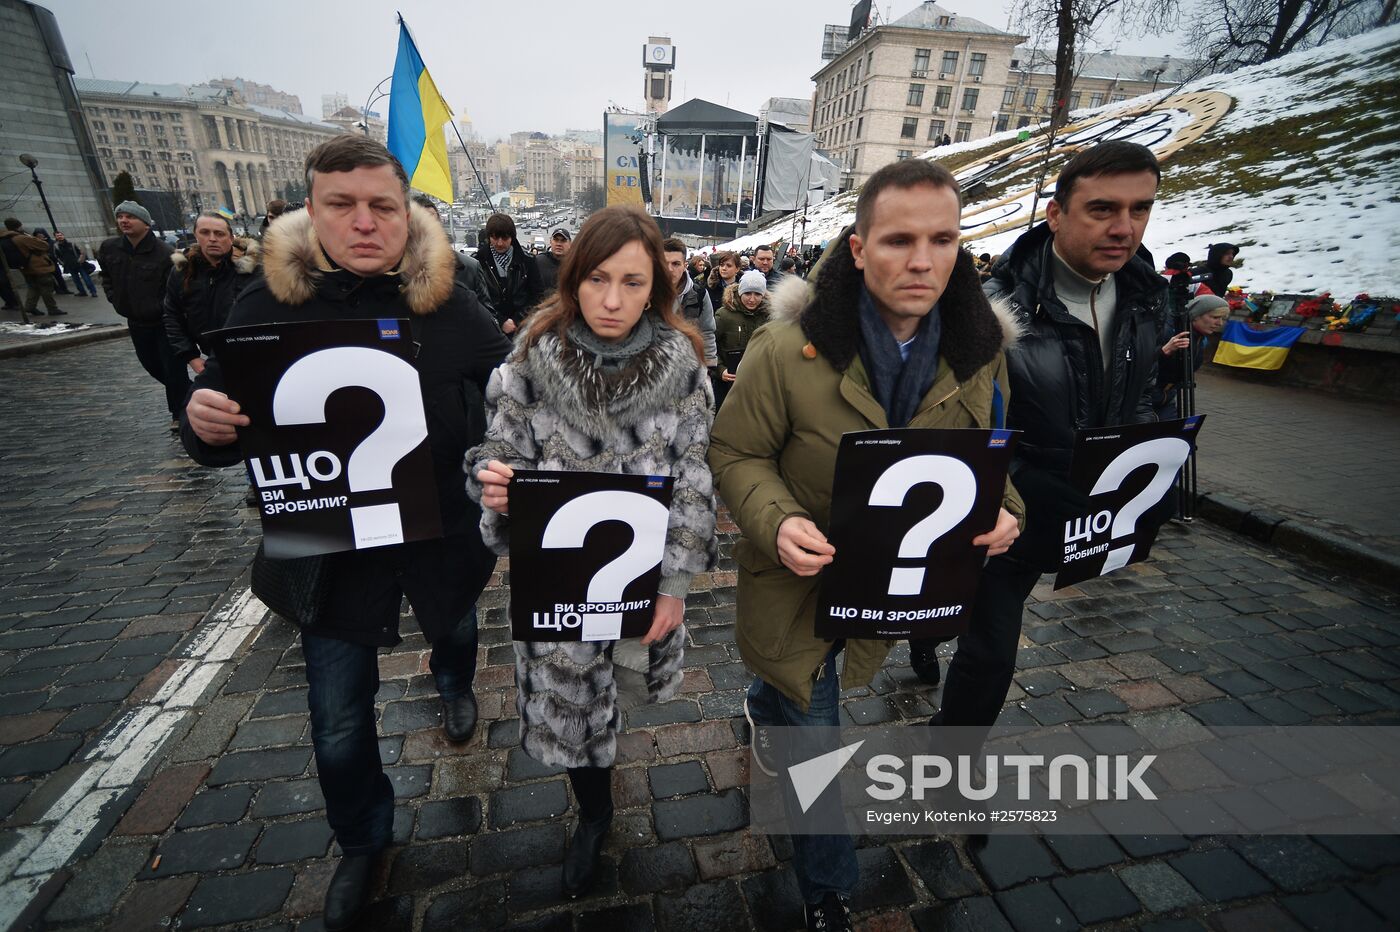 Anniversary of Maidan events in Kiev